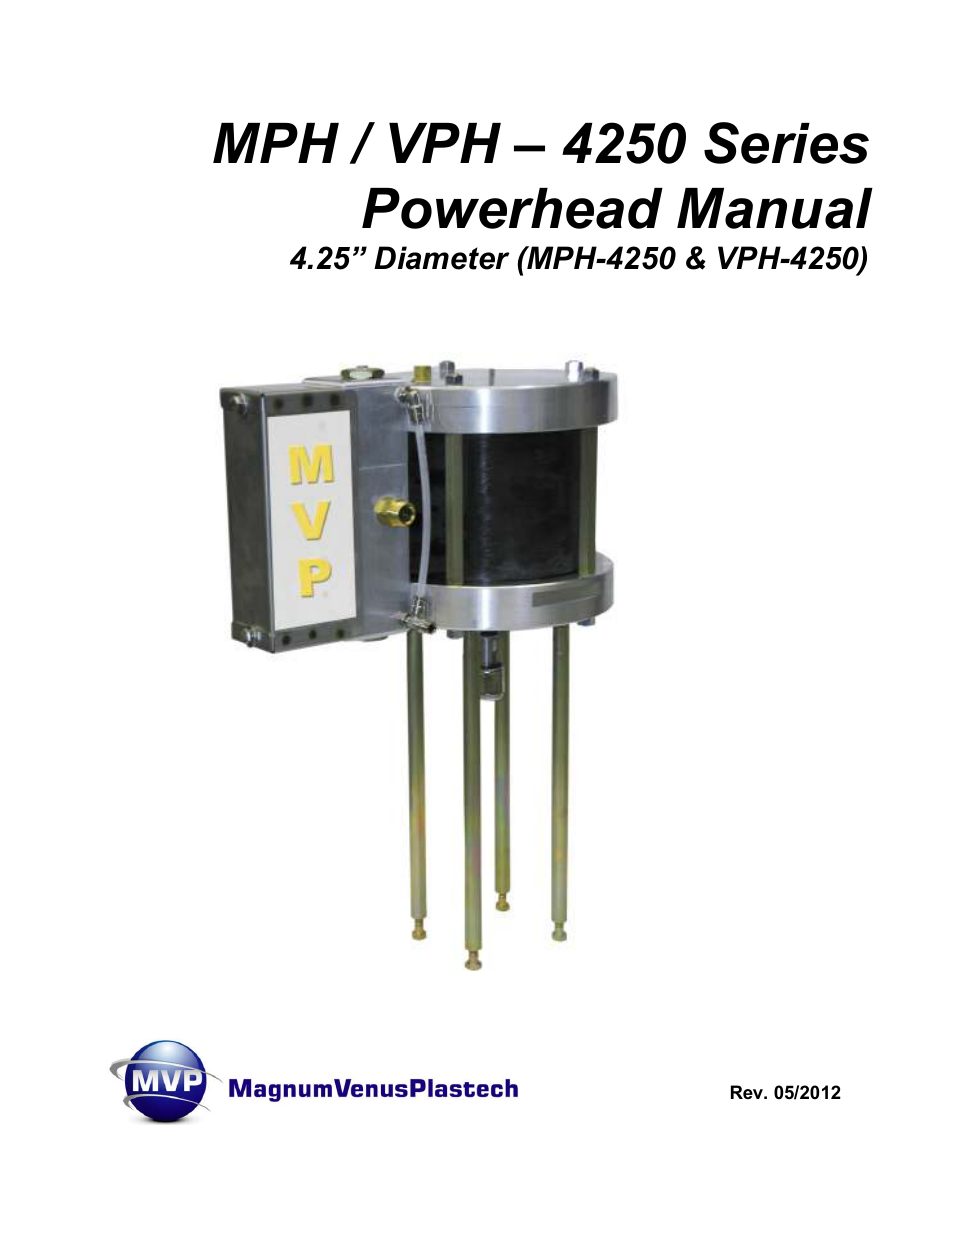 Powerhead MPH_VPH–4250 Series